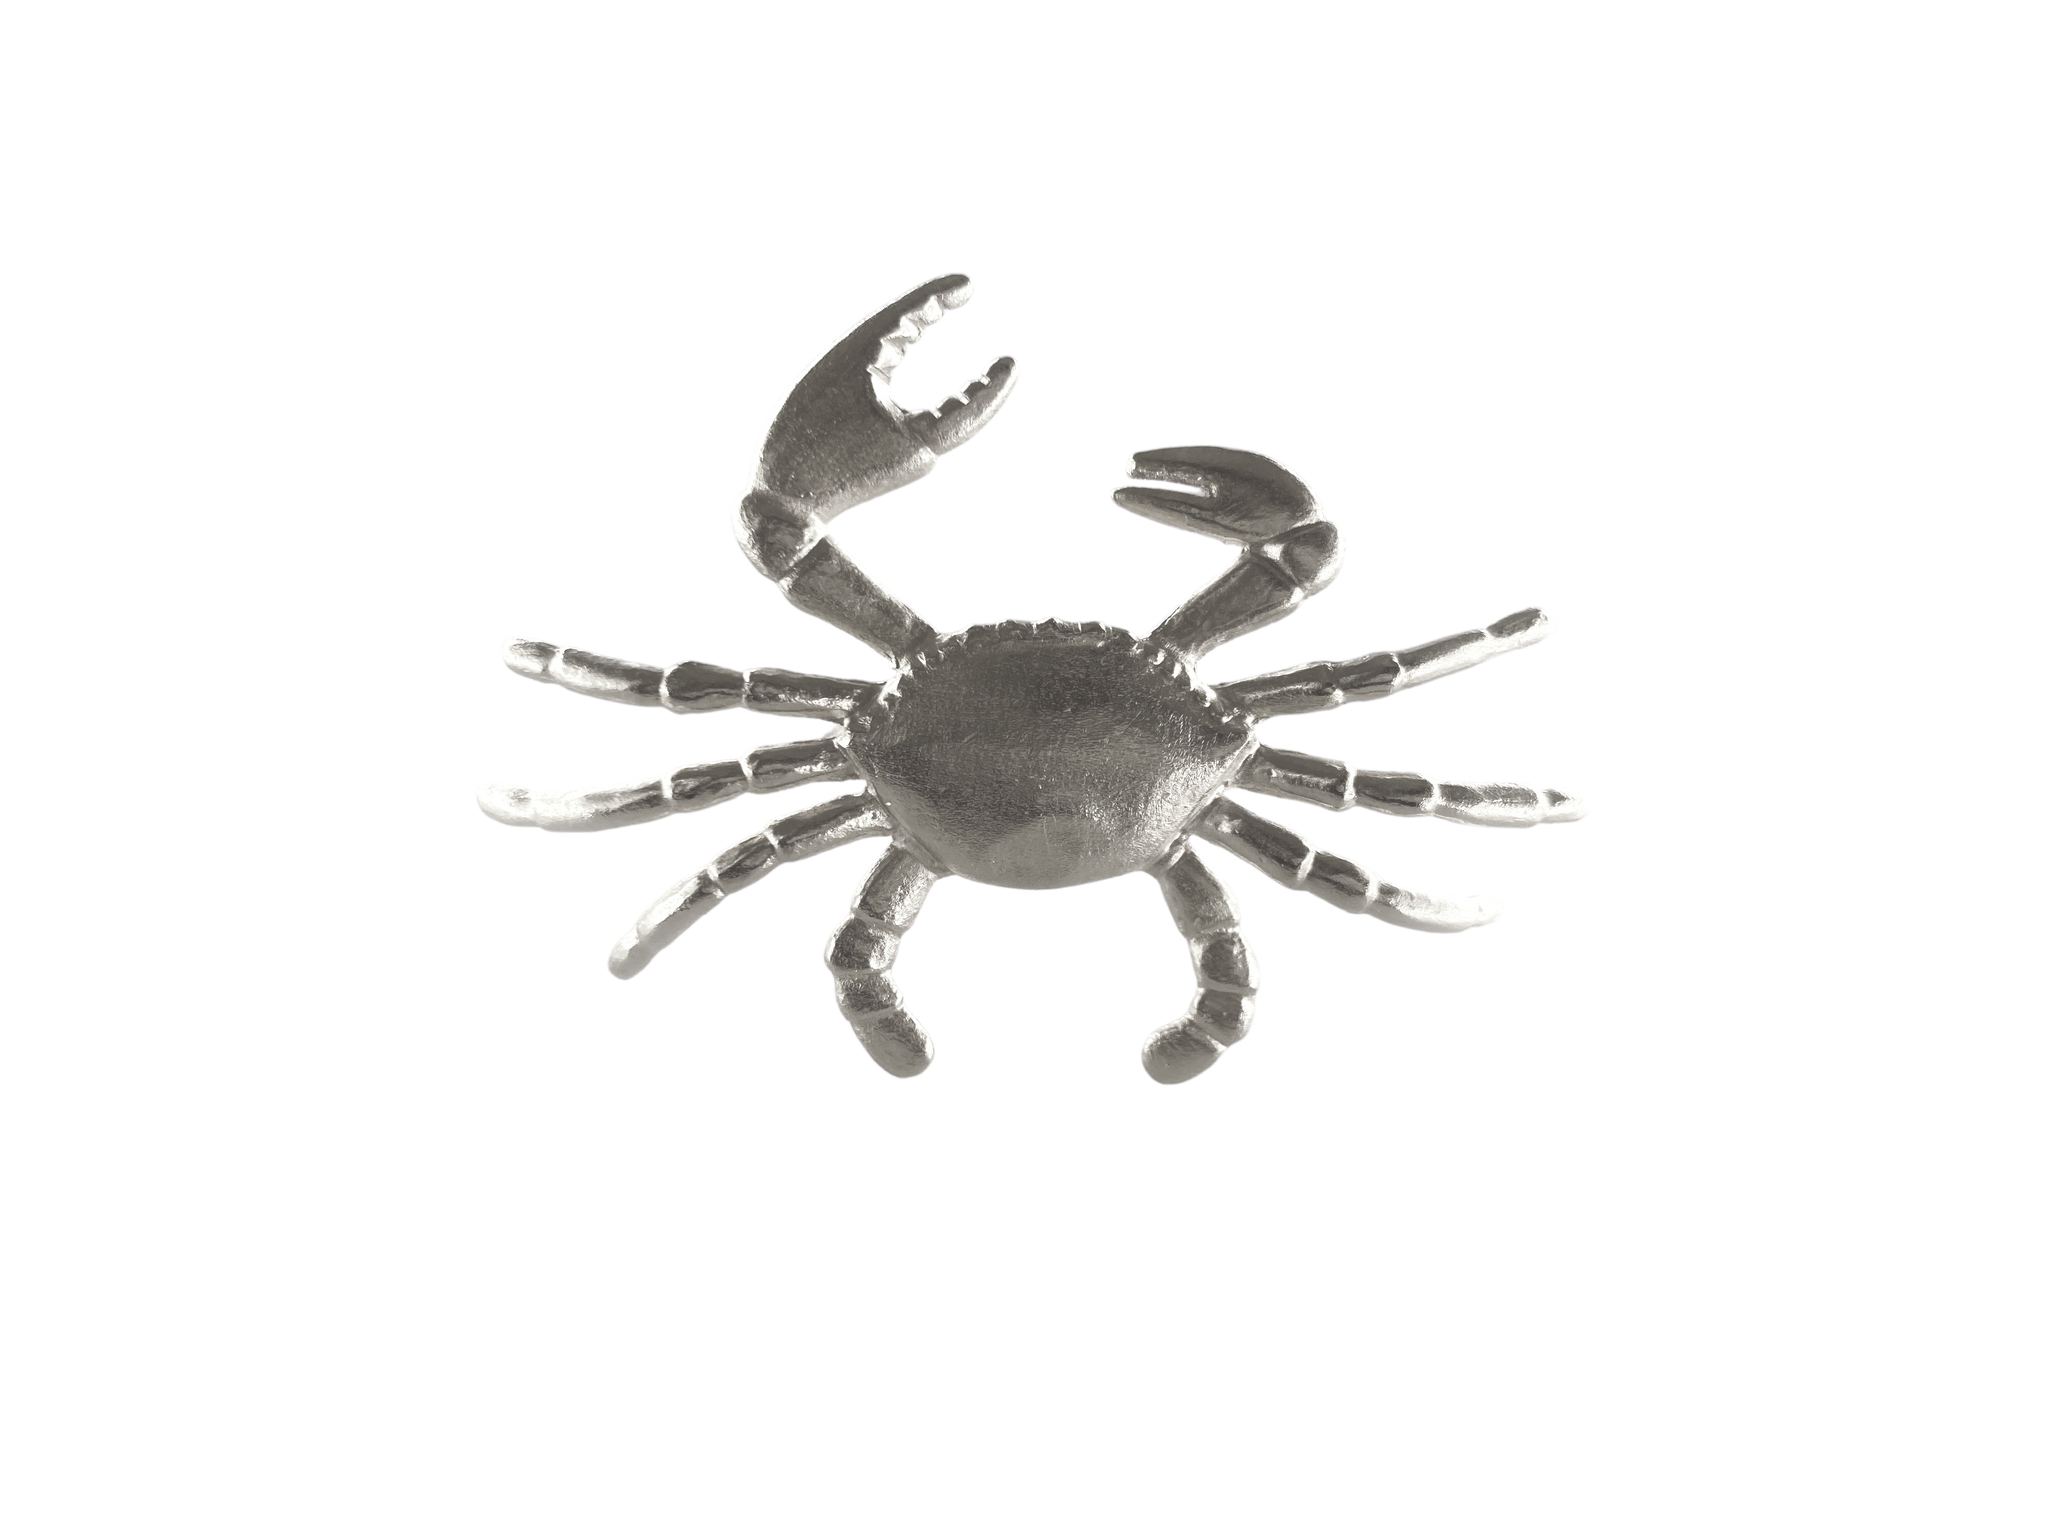 The Big Crab Ring